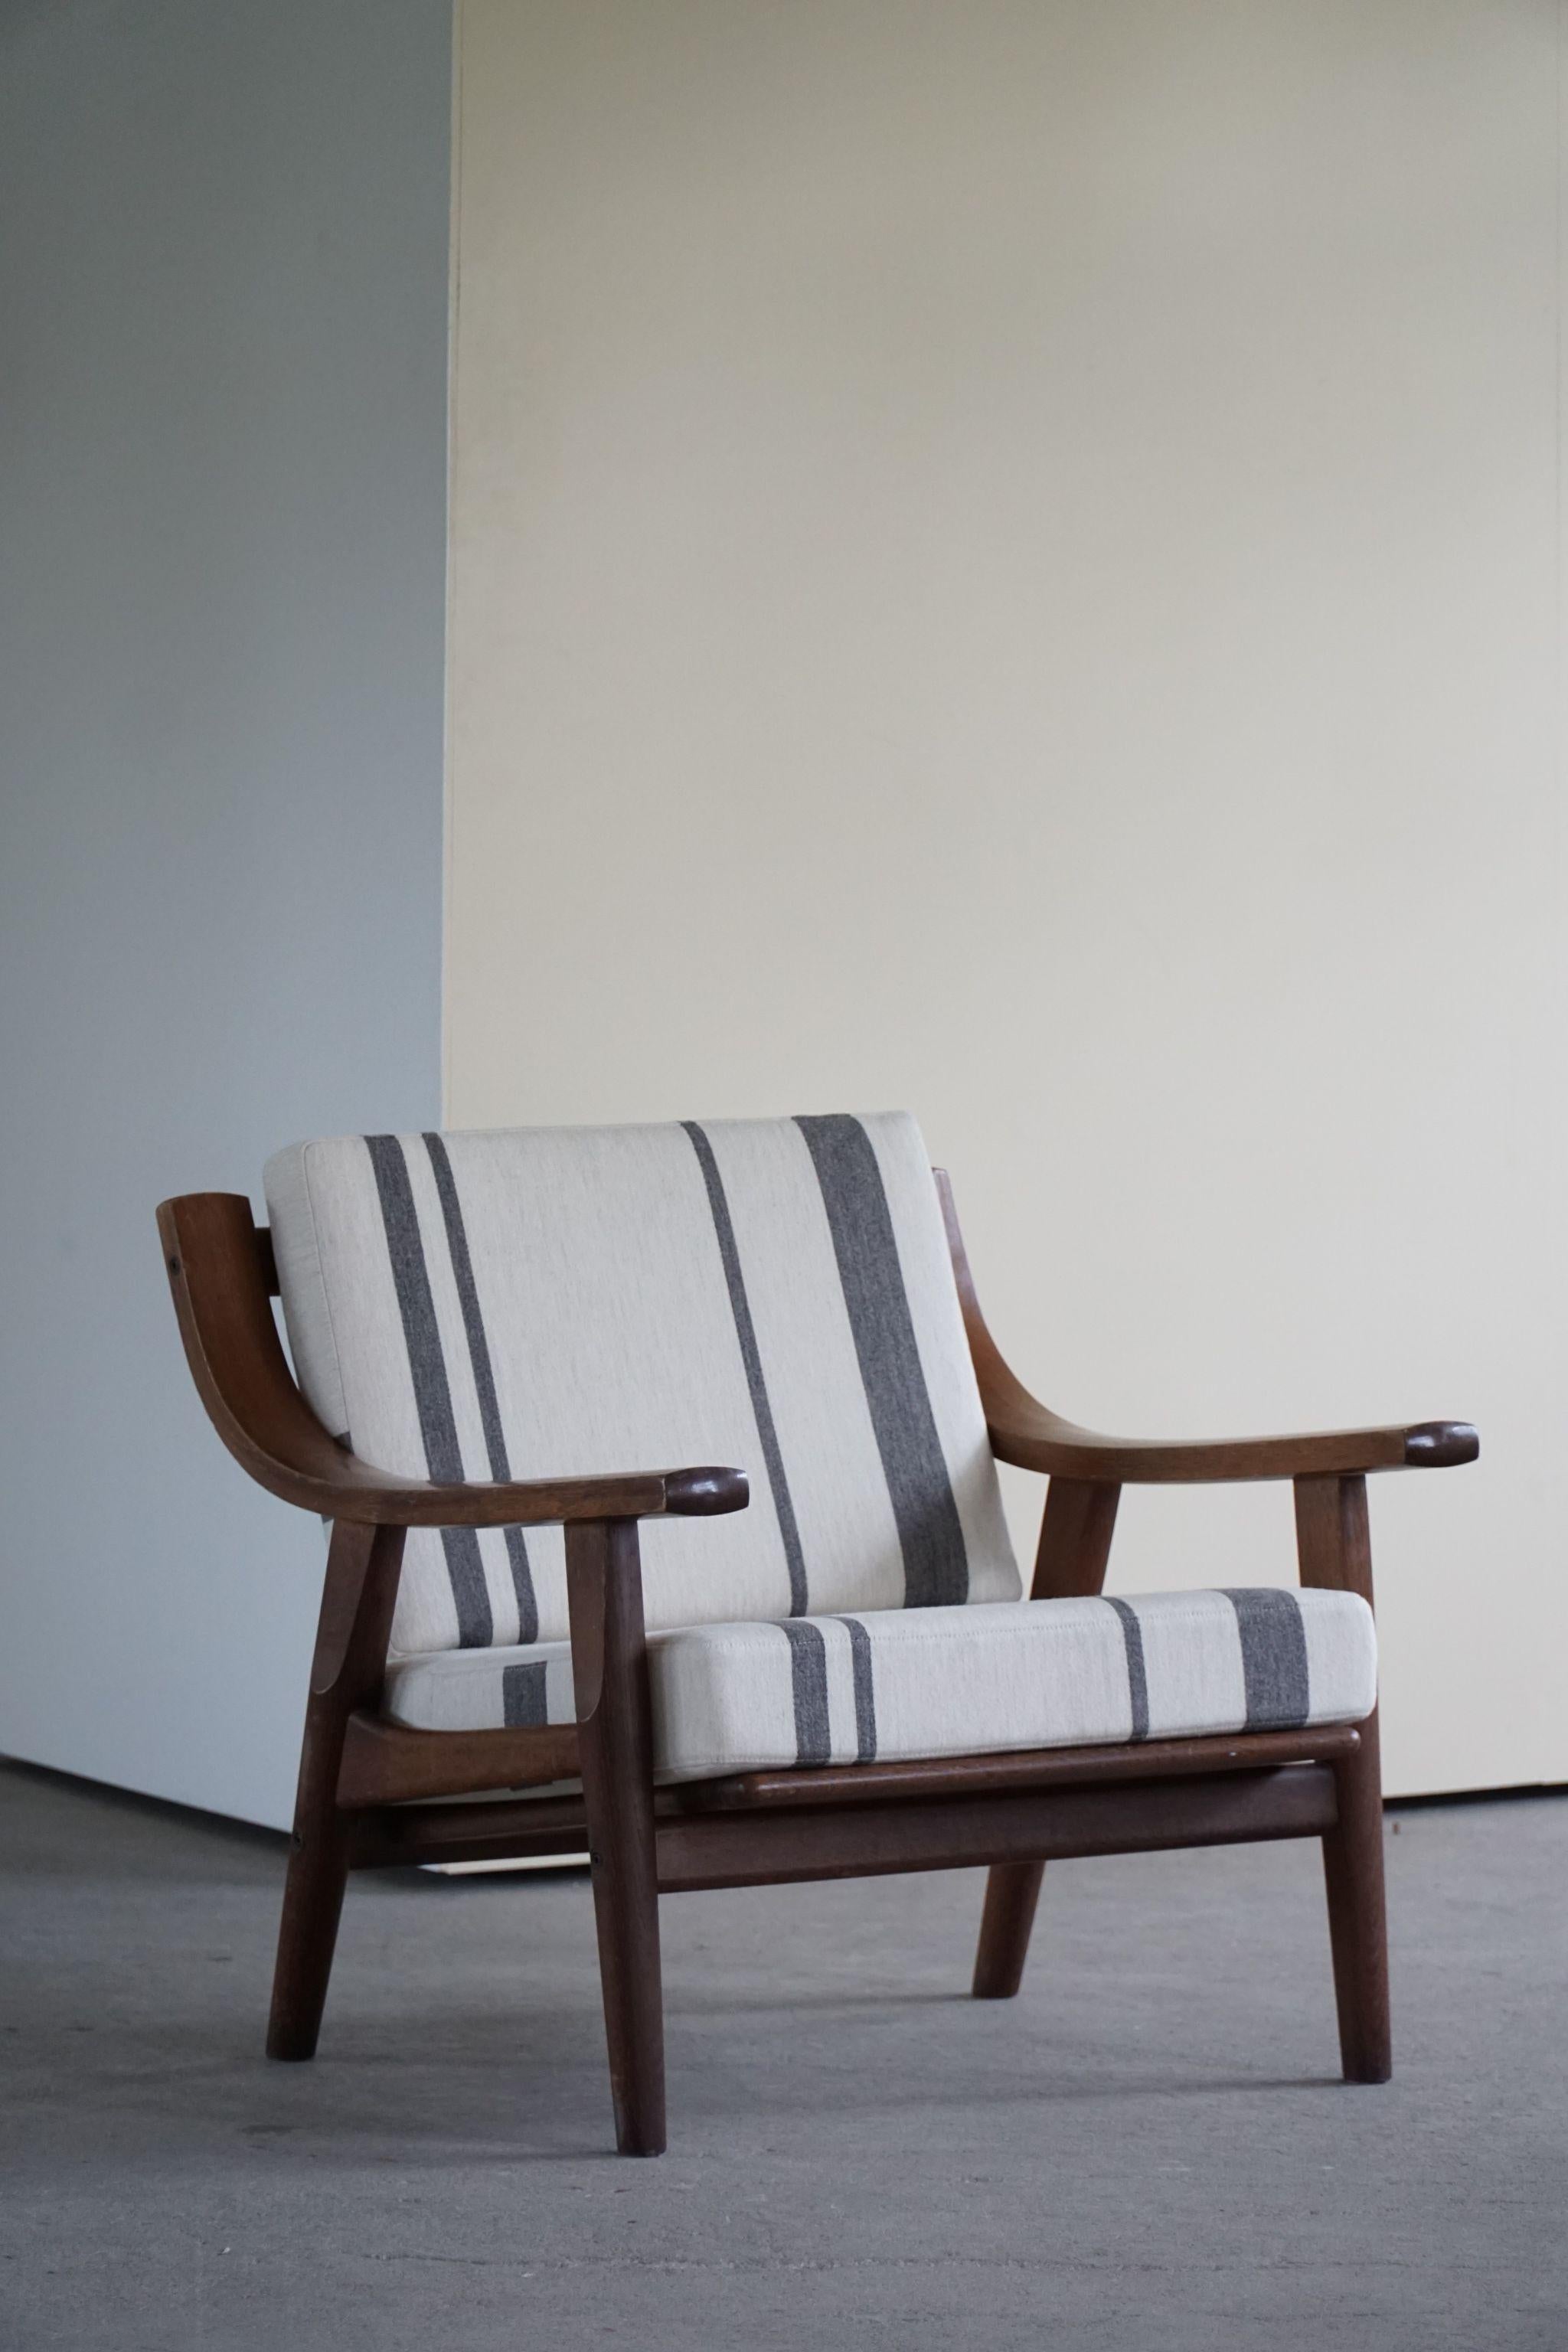 20th Century Hans J. Wegner for Getama, Pair of Lounge Chairs in Savak Wool, 